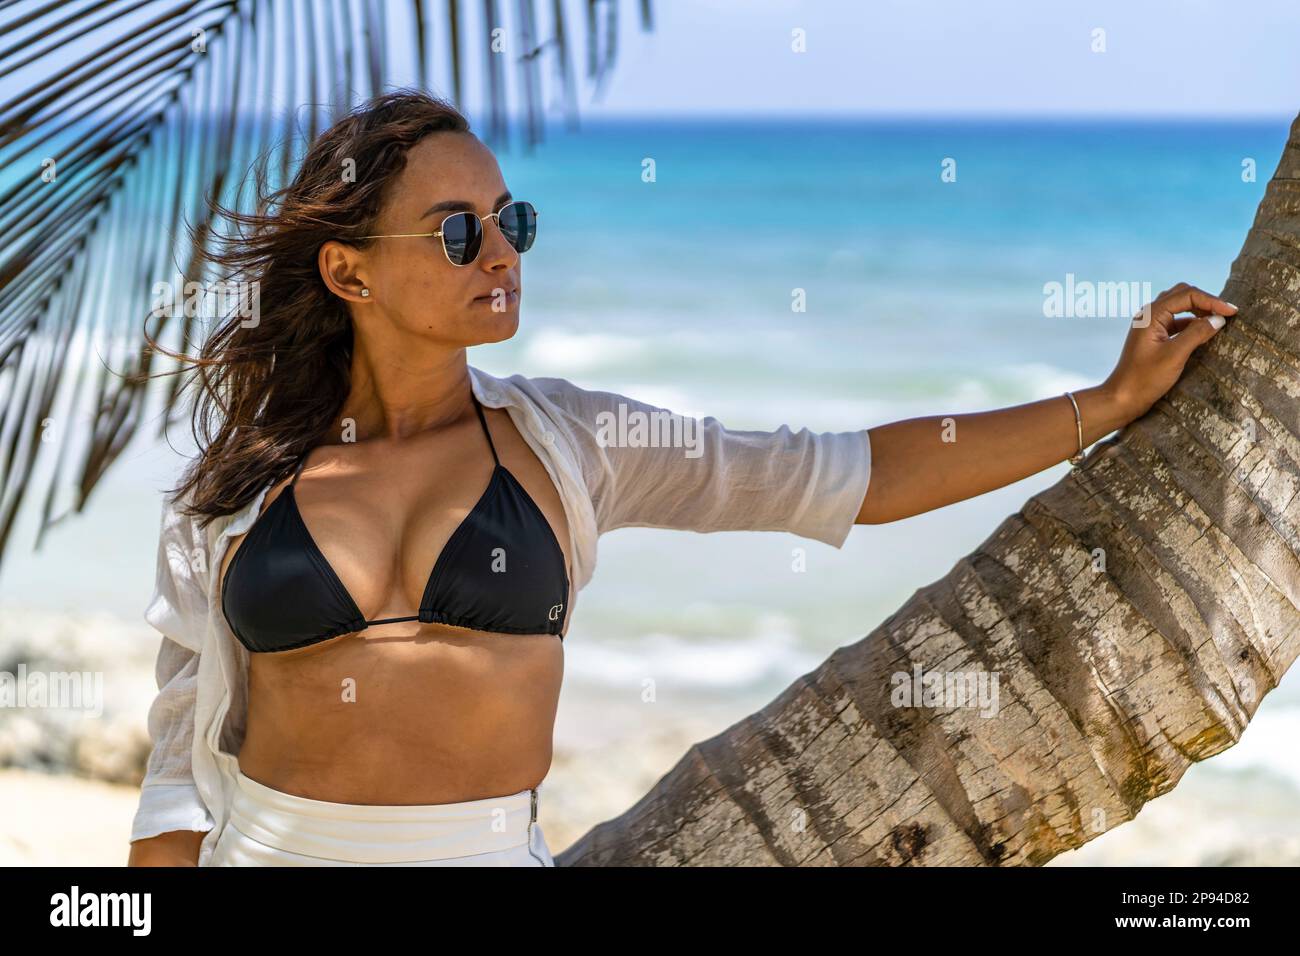 Latino woman bikini hi-res stock photography and images - Page 2 - Alamy